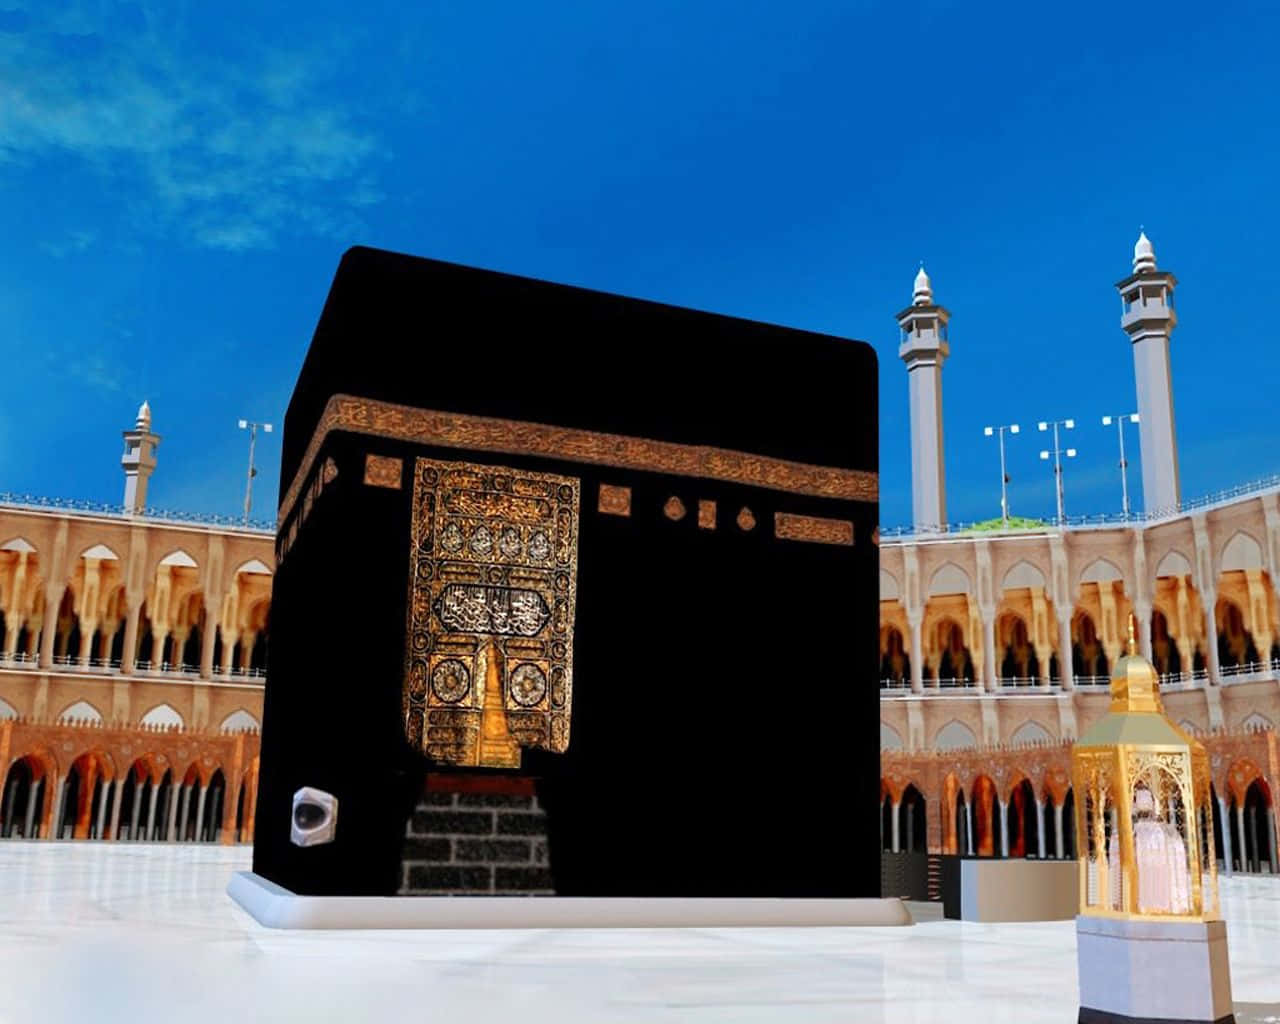 Einwunderschönes Bild Der Heiligen Stadt Mekka, Saudi-arabien.